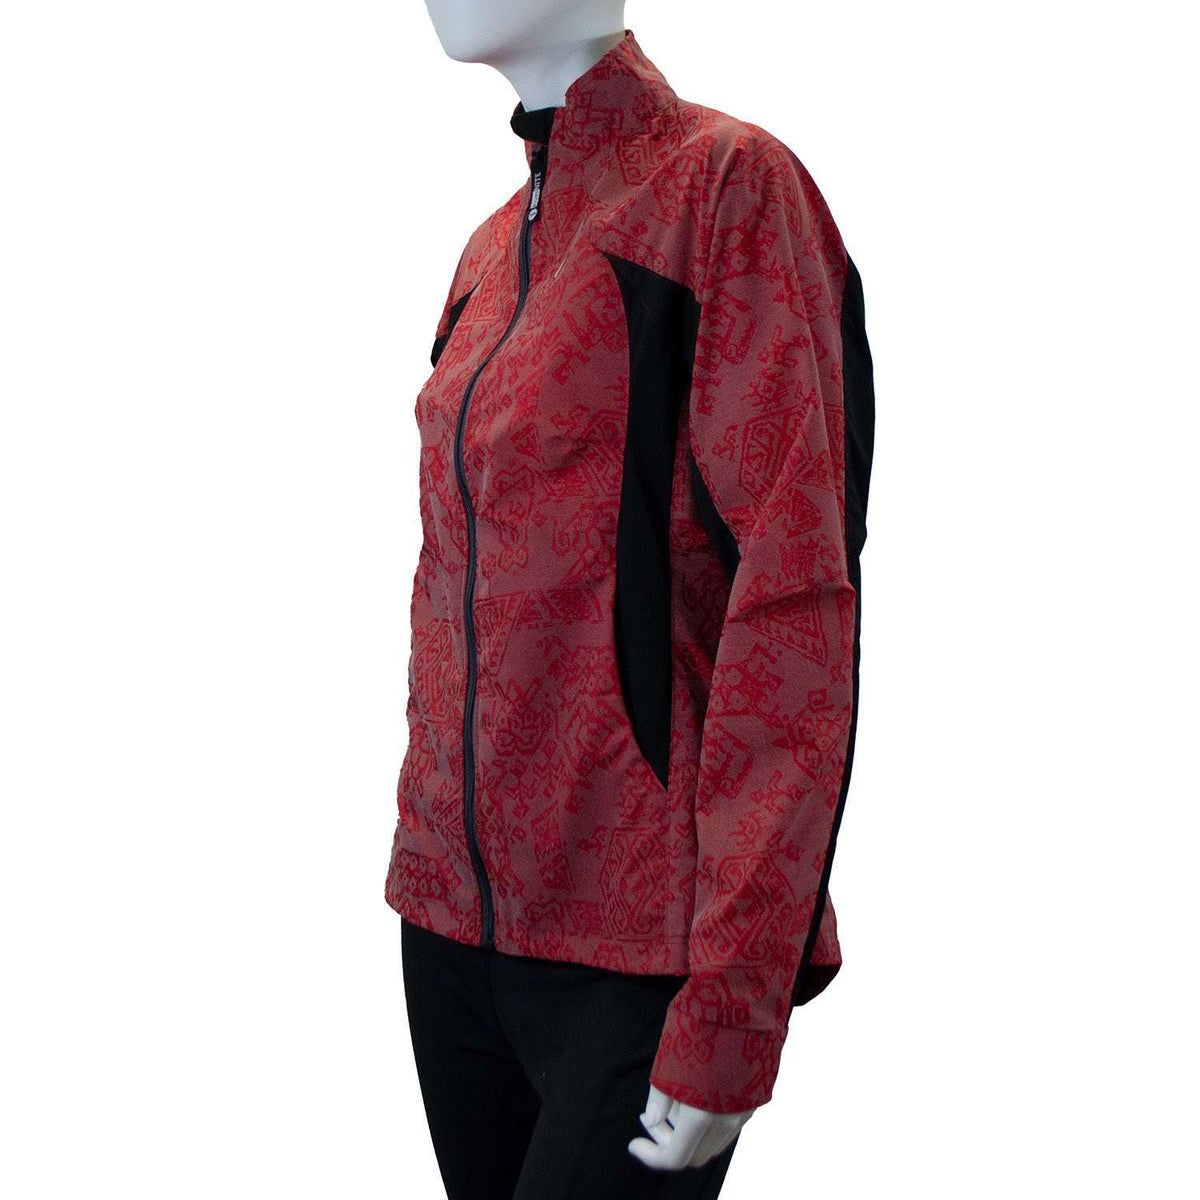 Bristol Women's Reflective Jacket in Red Aztec/Black